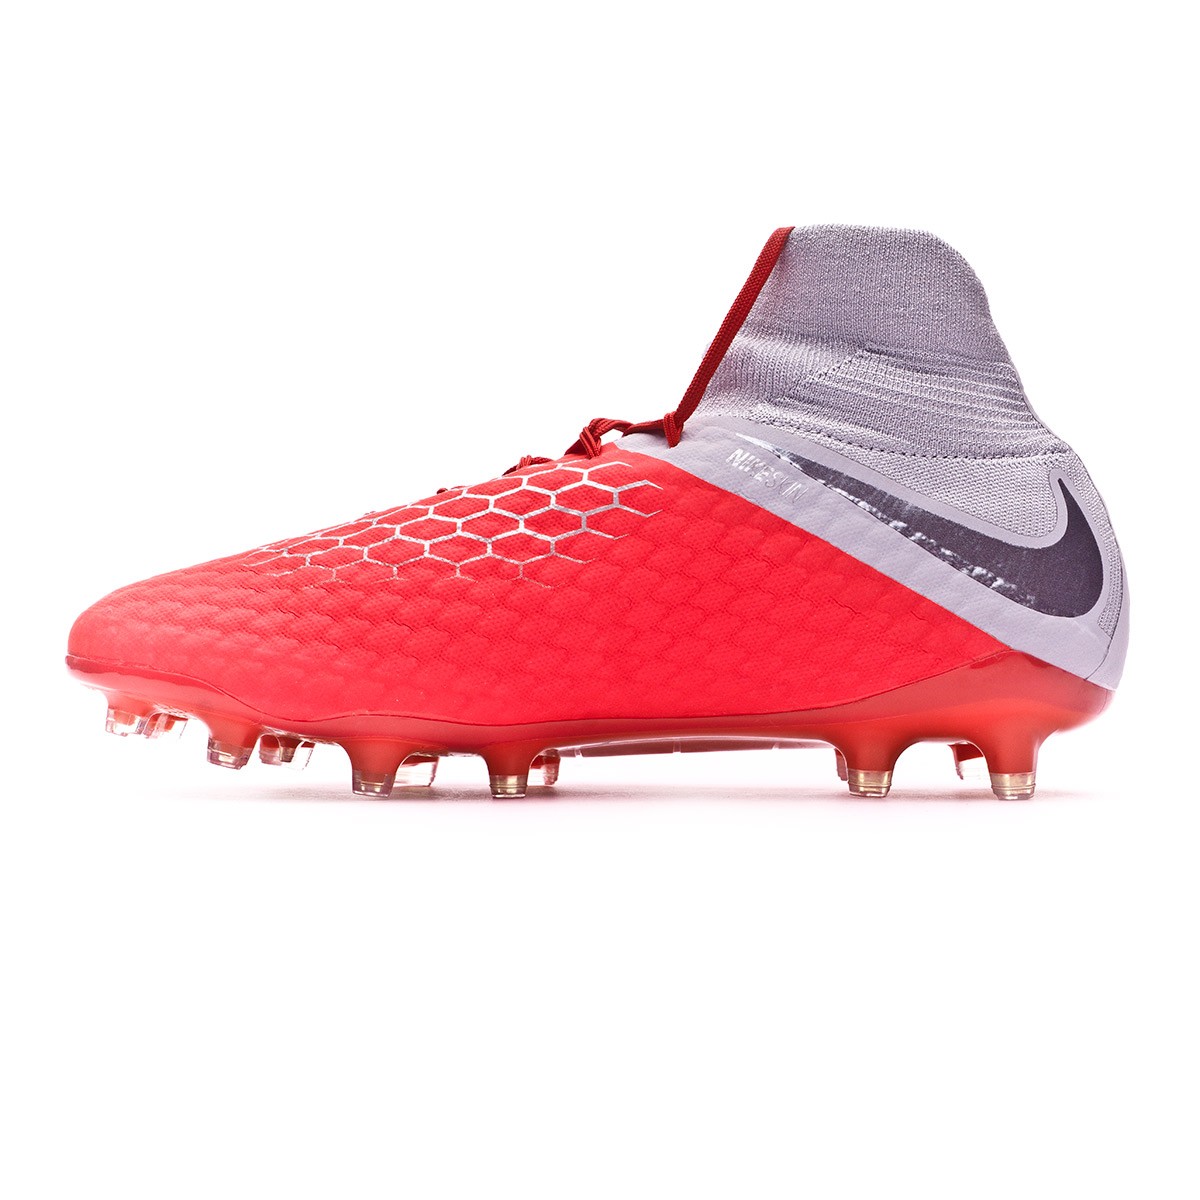 Bota de fútbol Nike Hypervenom Phantom III Pro DF FG Light crimson-Metallic  dark grey-Wolf grey - Tienda de fútbol Fútbol Emotion